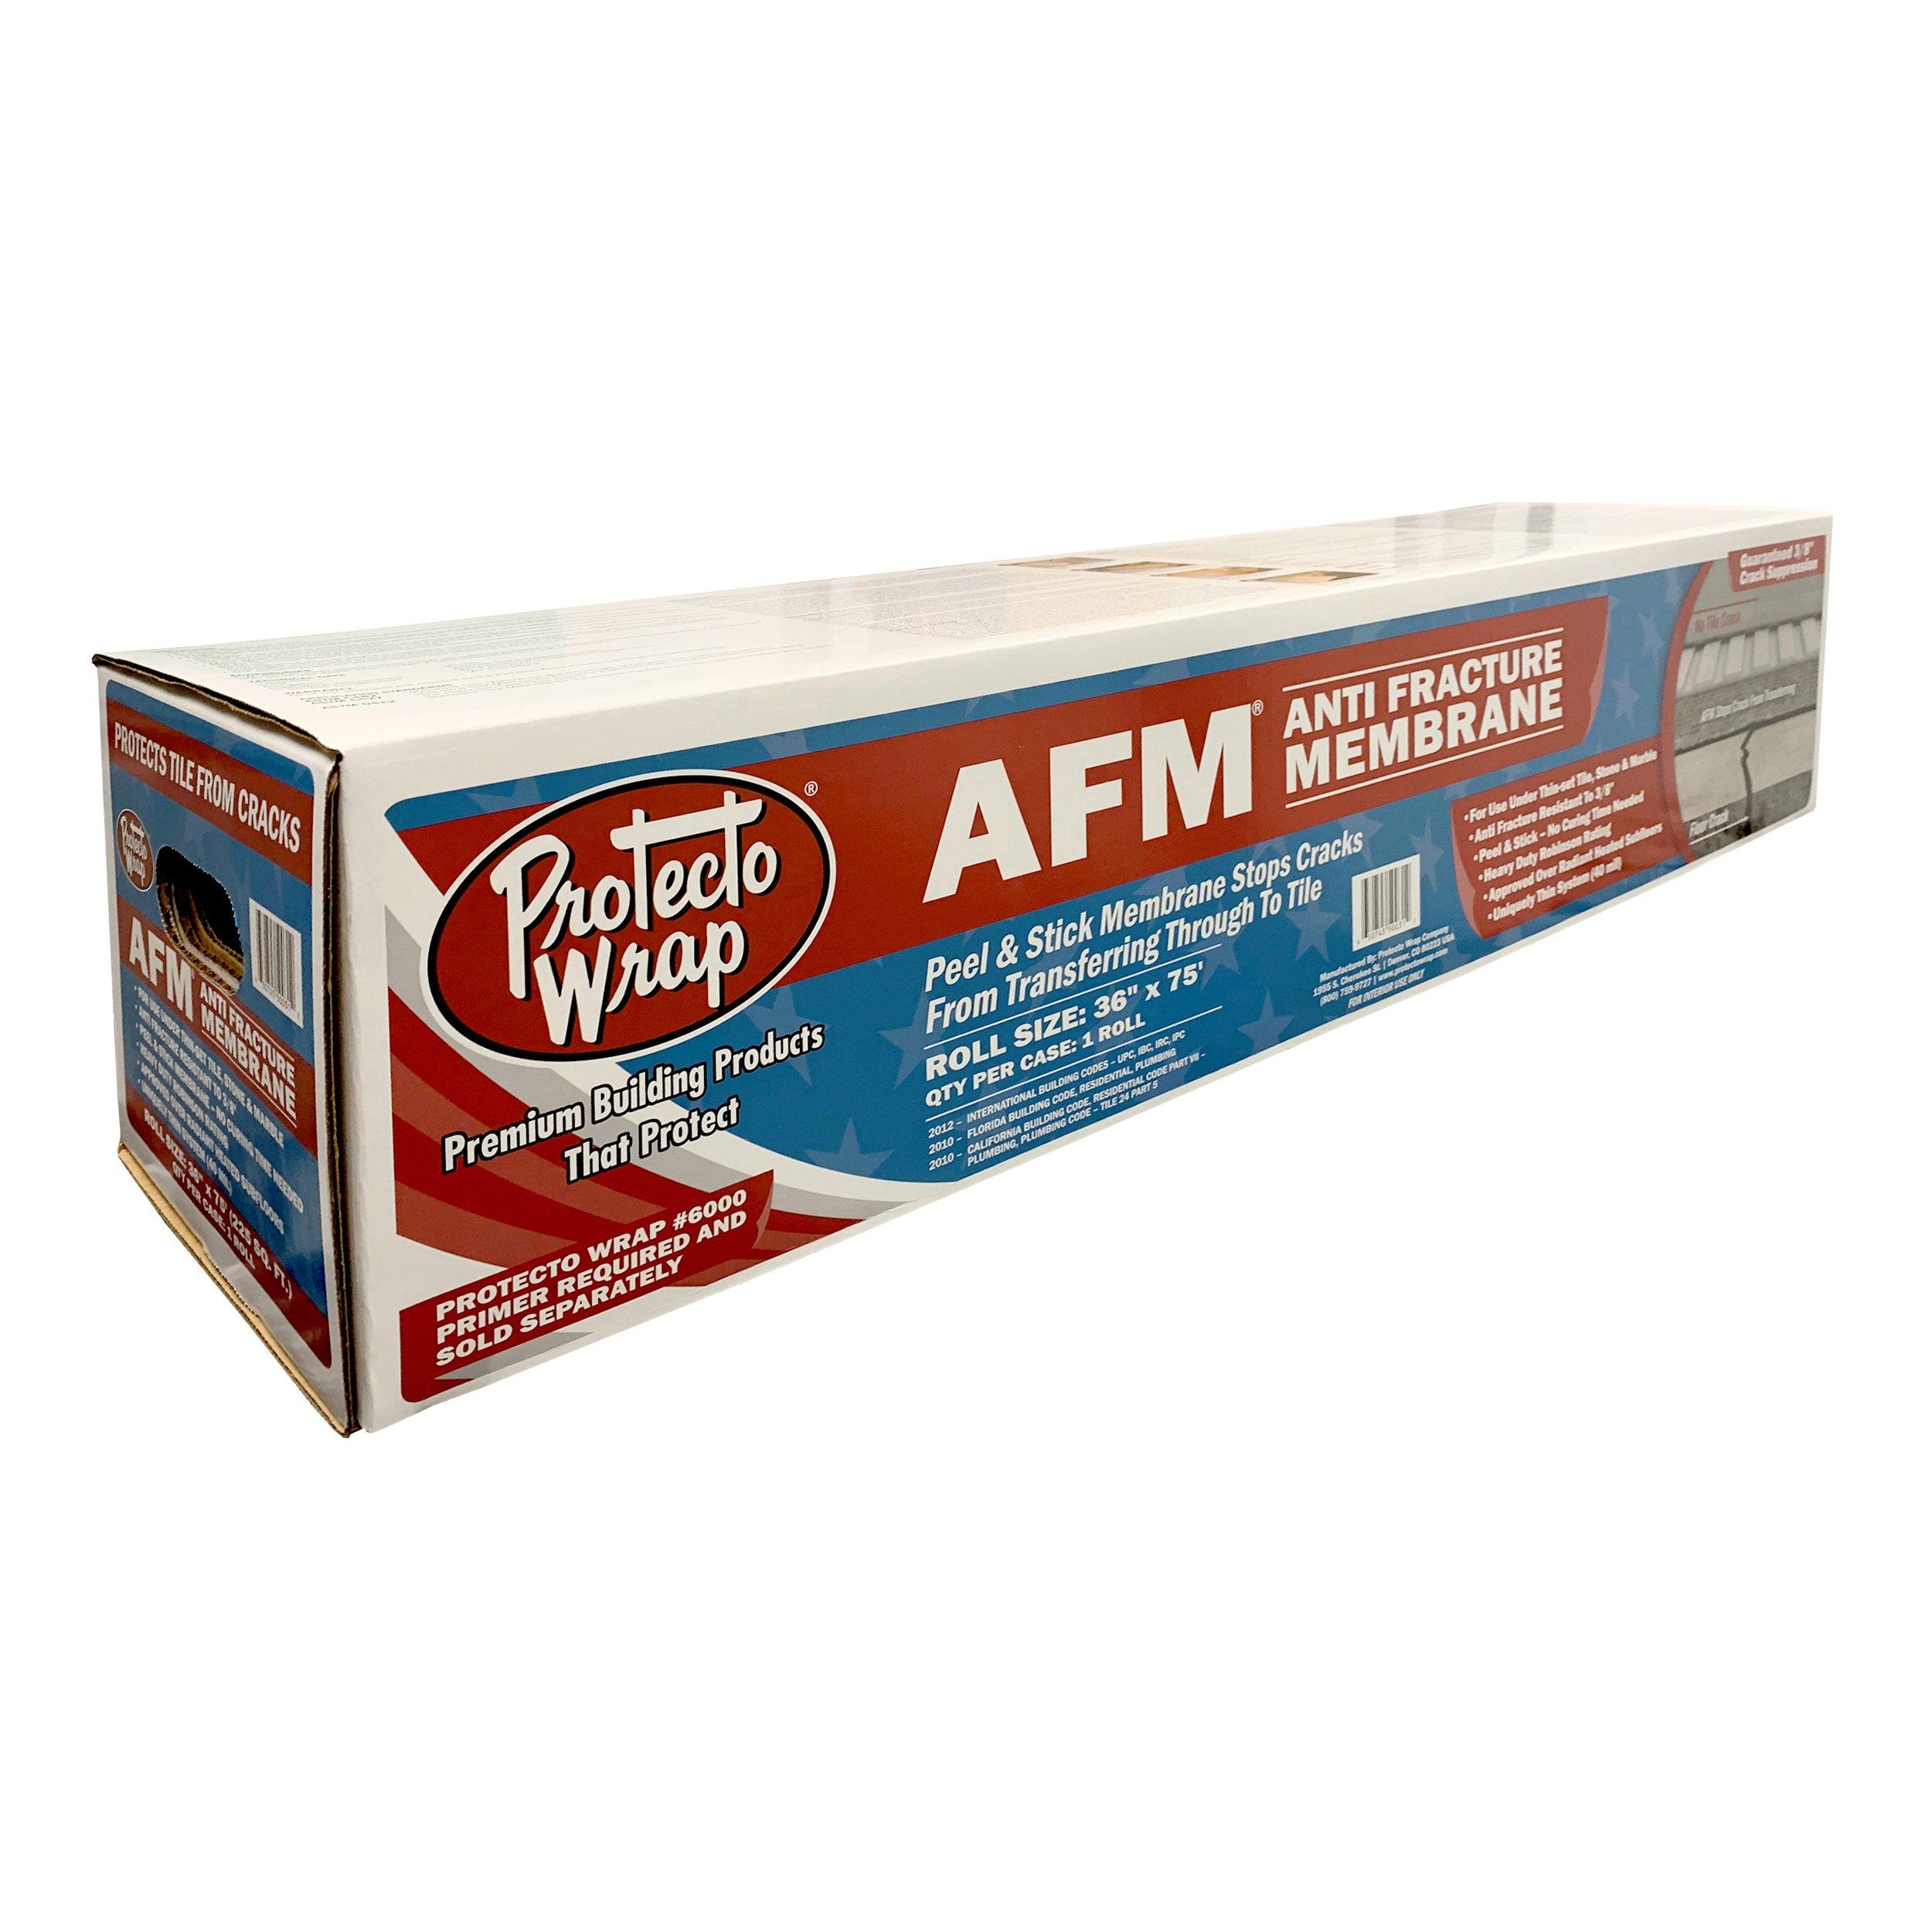 Protecto Wrap Anti Fracture Membrane